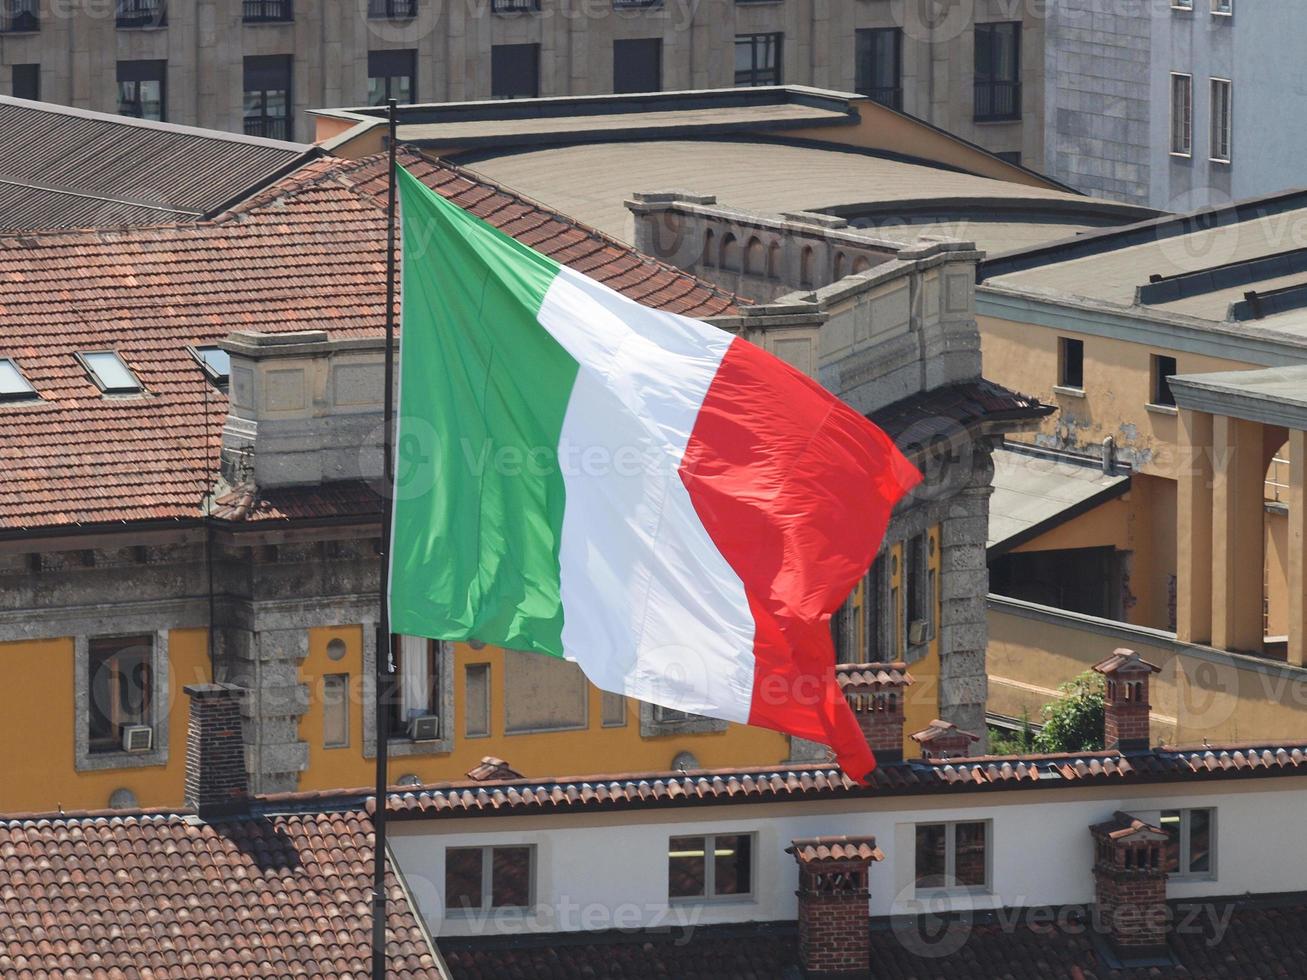 bandera italiana de italia foto